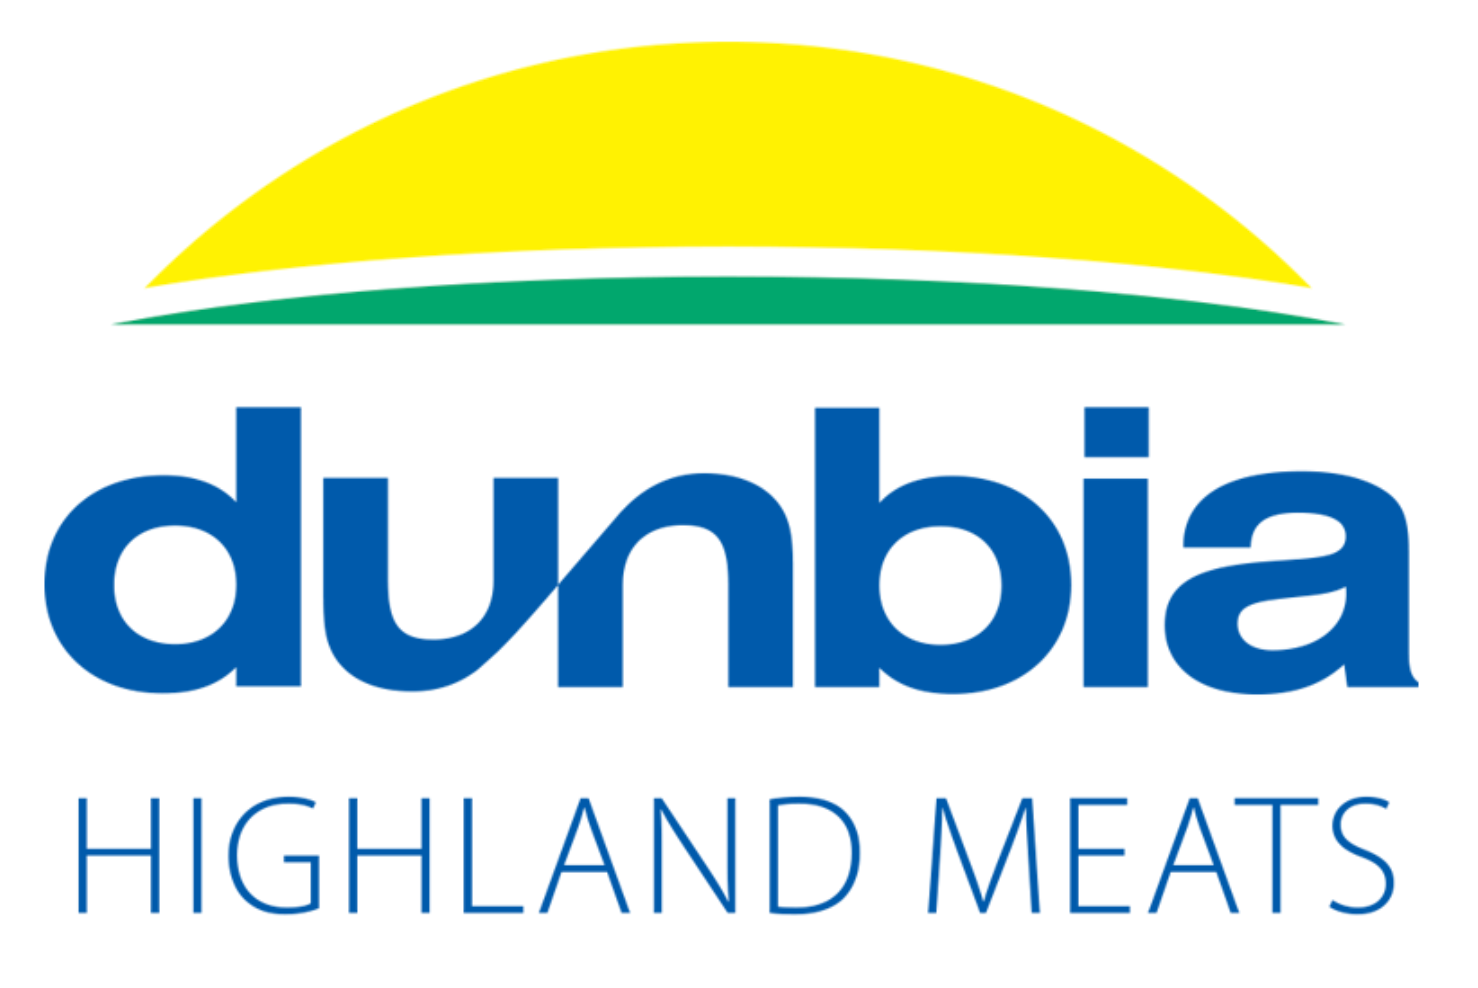 Highland Meats